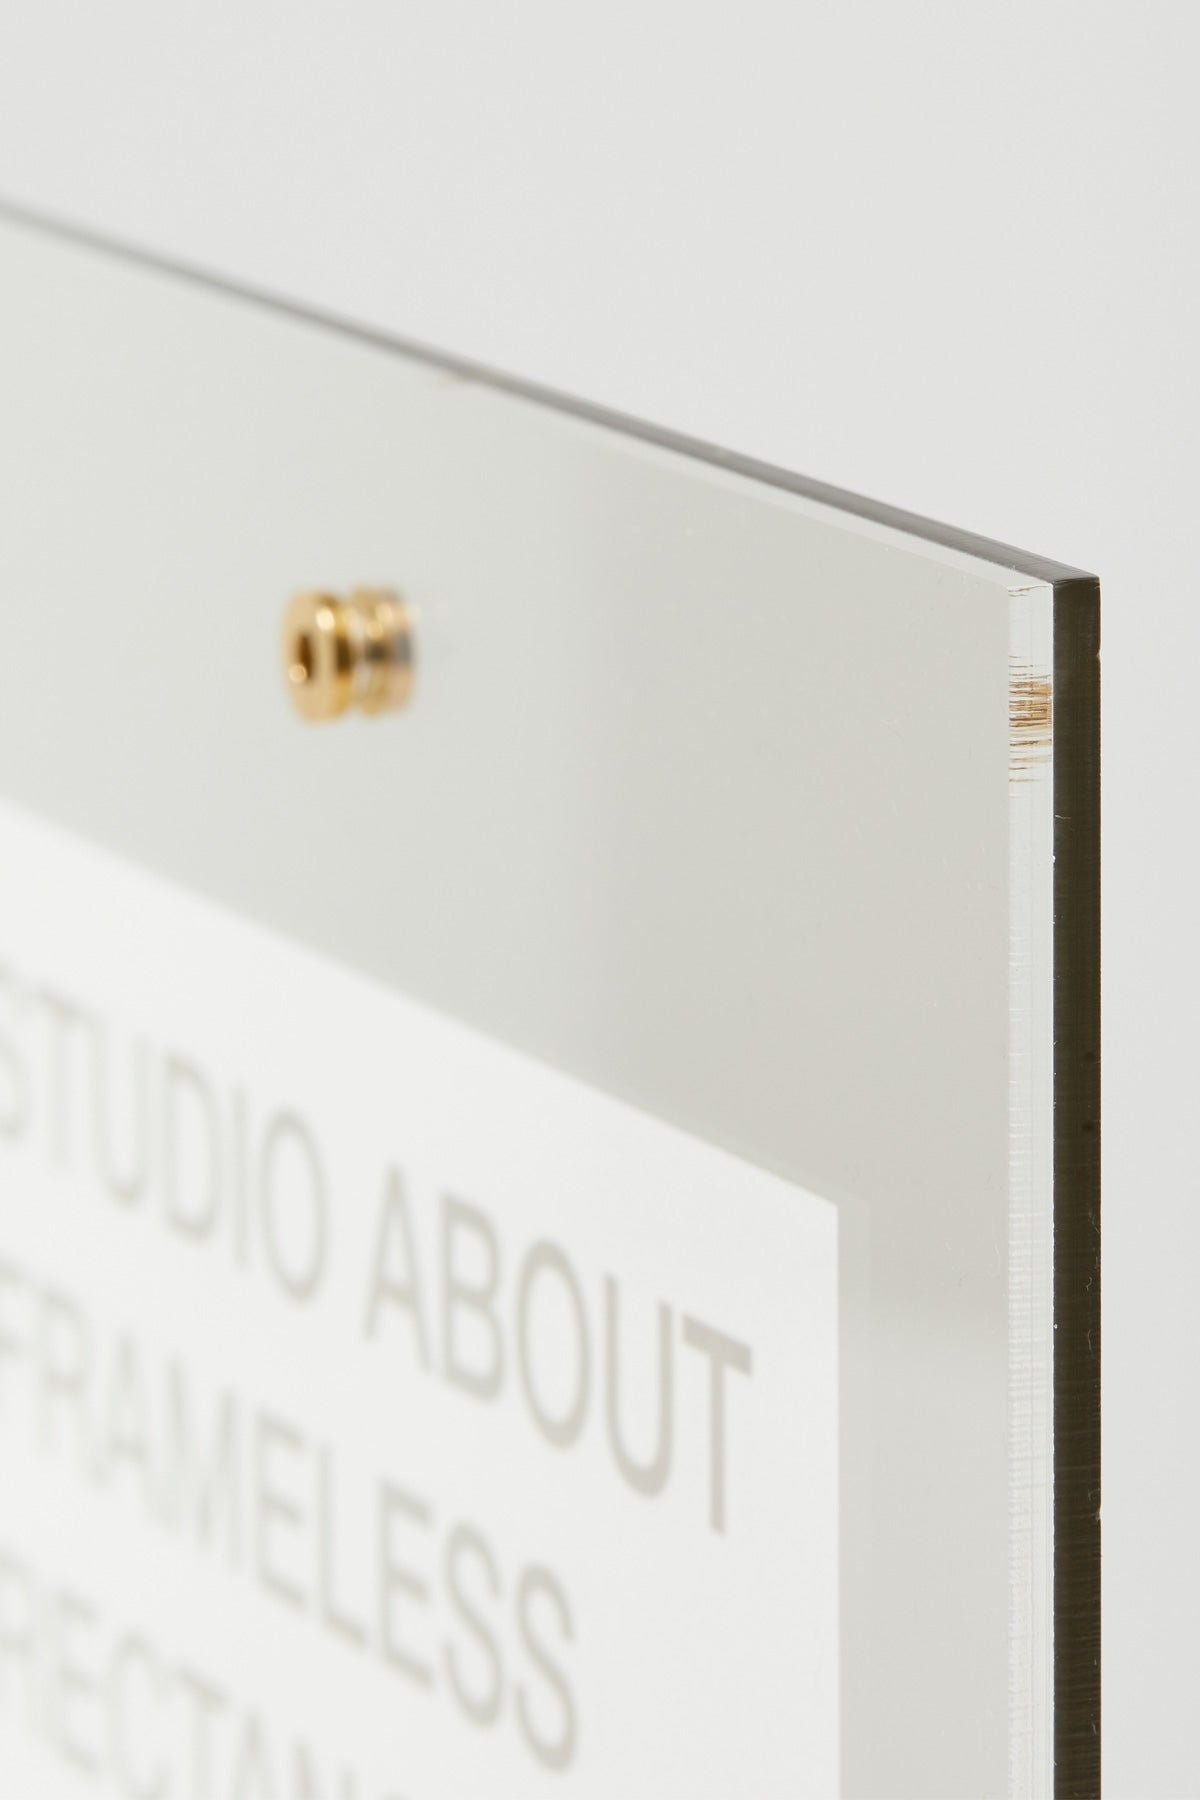 Studio About Frameless Frame A4 Rectangle, Smoke